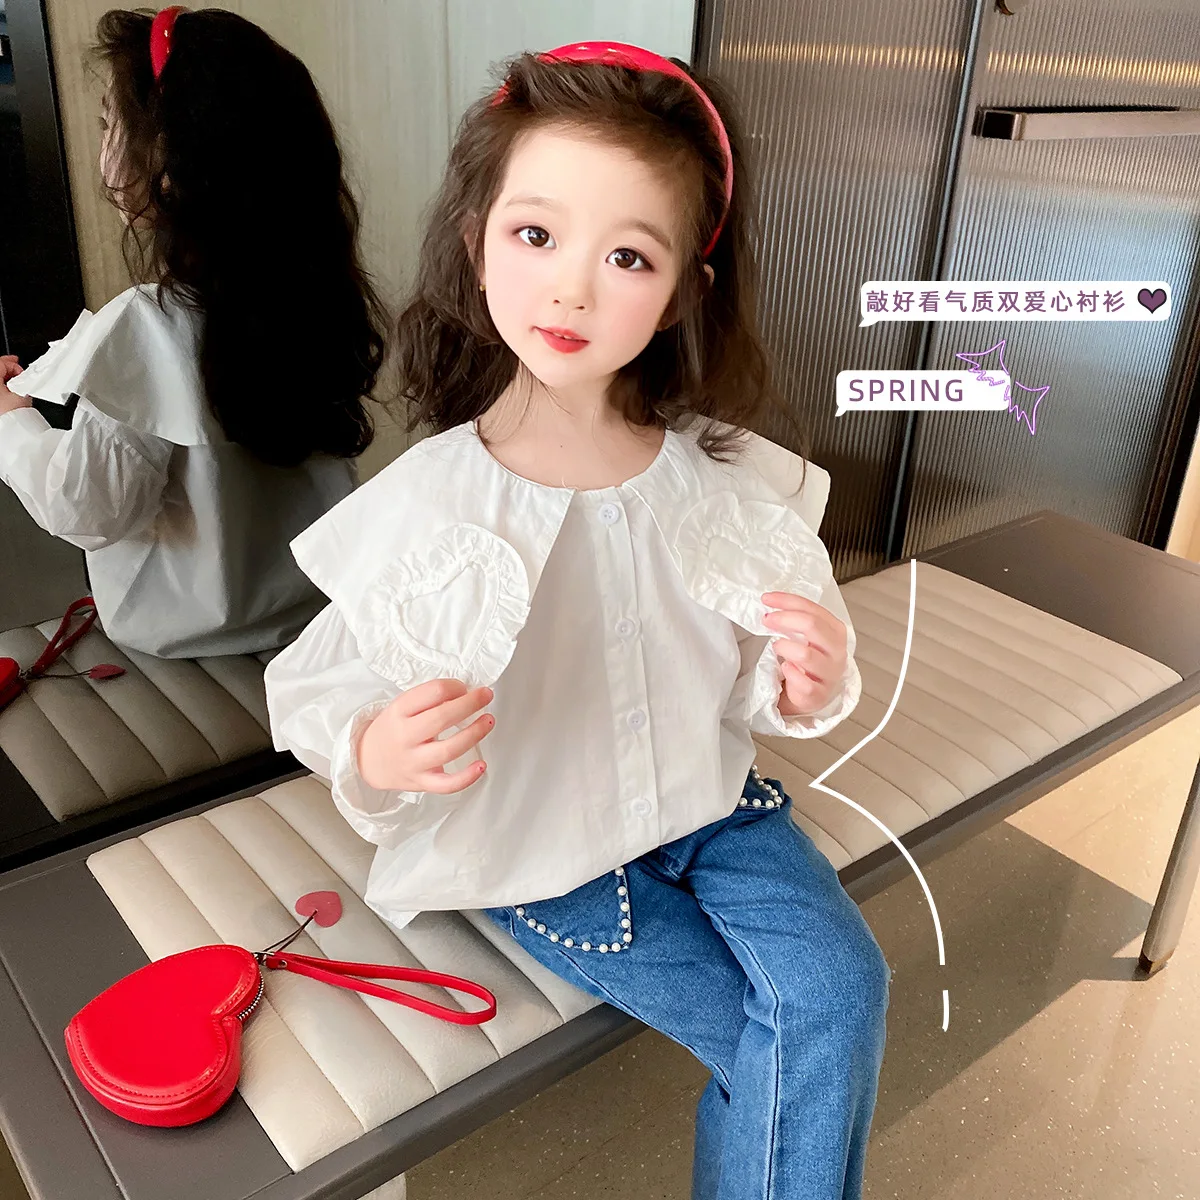 

Laura Kors Arrivals Spring Children Long Sleeve Turn-down Collar White Pink Girls Children T-shirt Child Tops Clothes 18M-7T